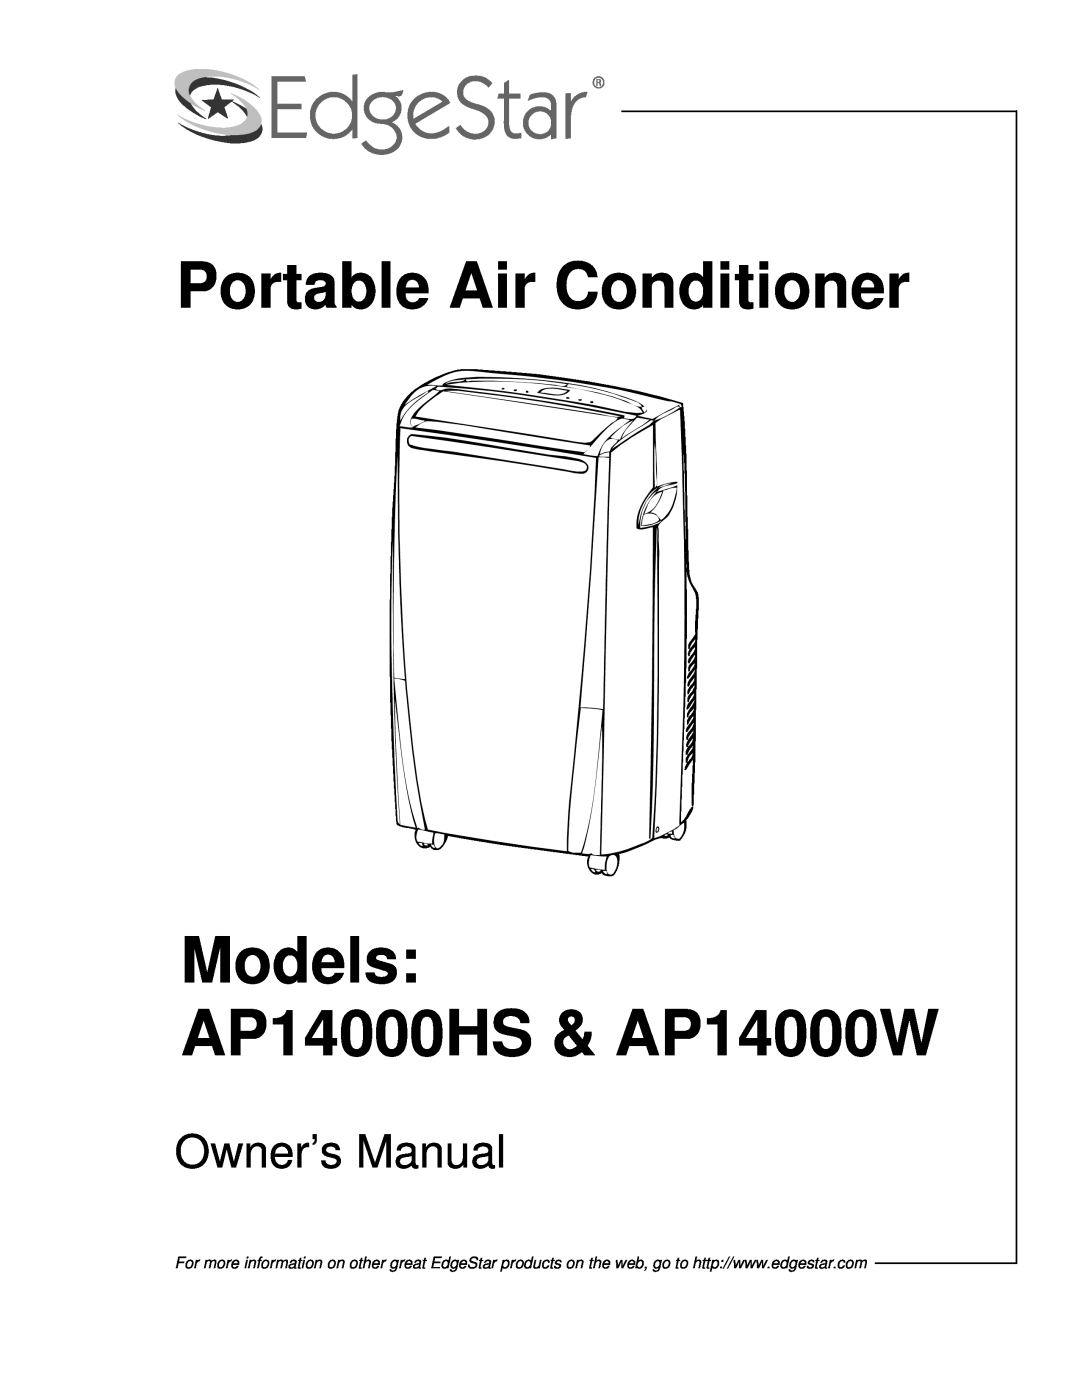 EdgeStar owner manual Portable Air Conditioner Models, AP14000HS & AP14000W 